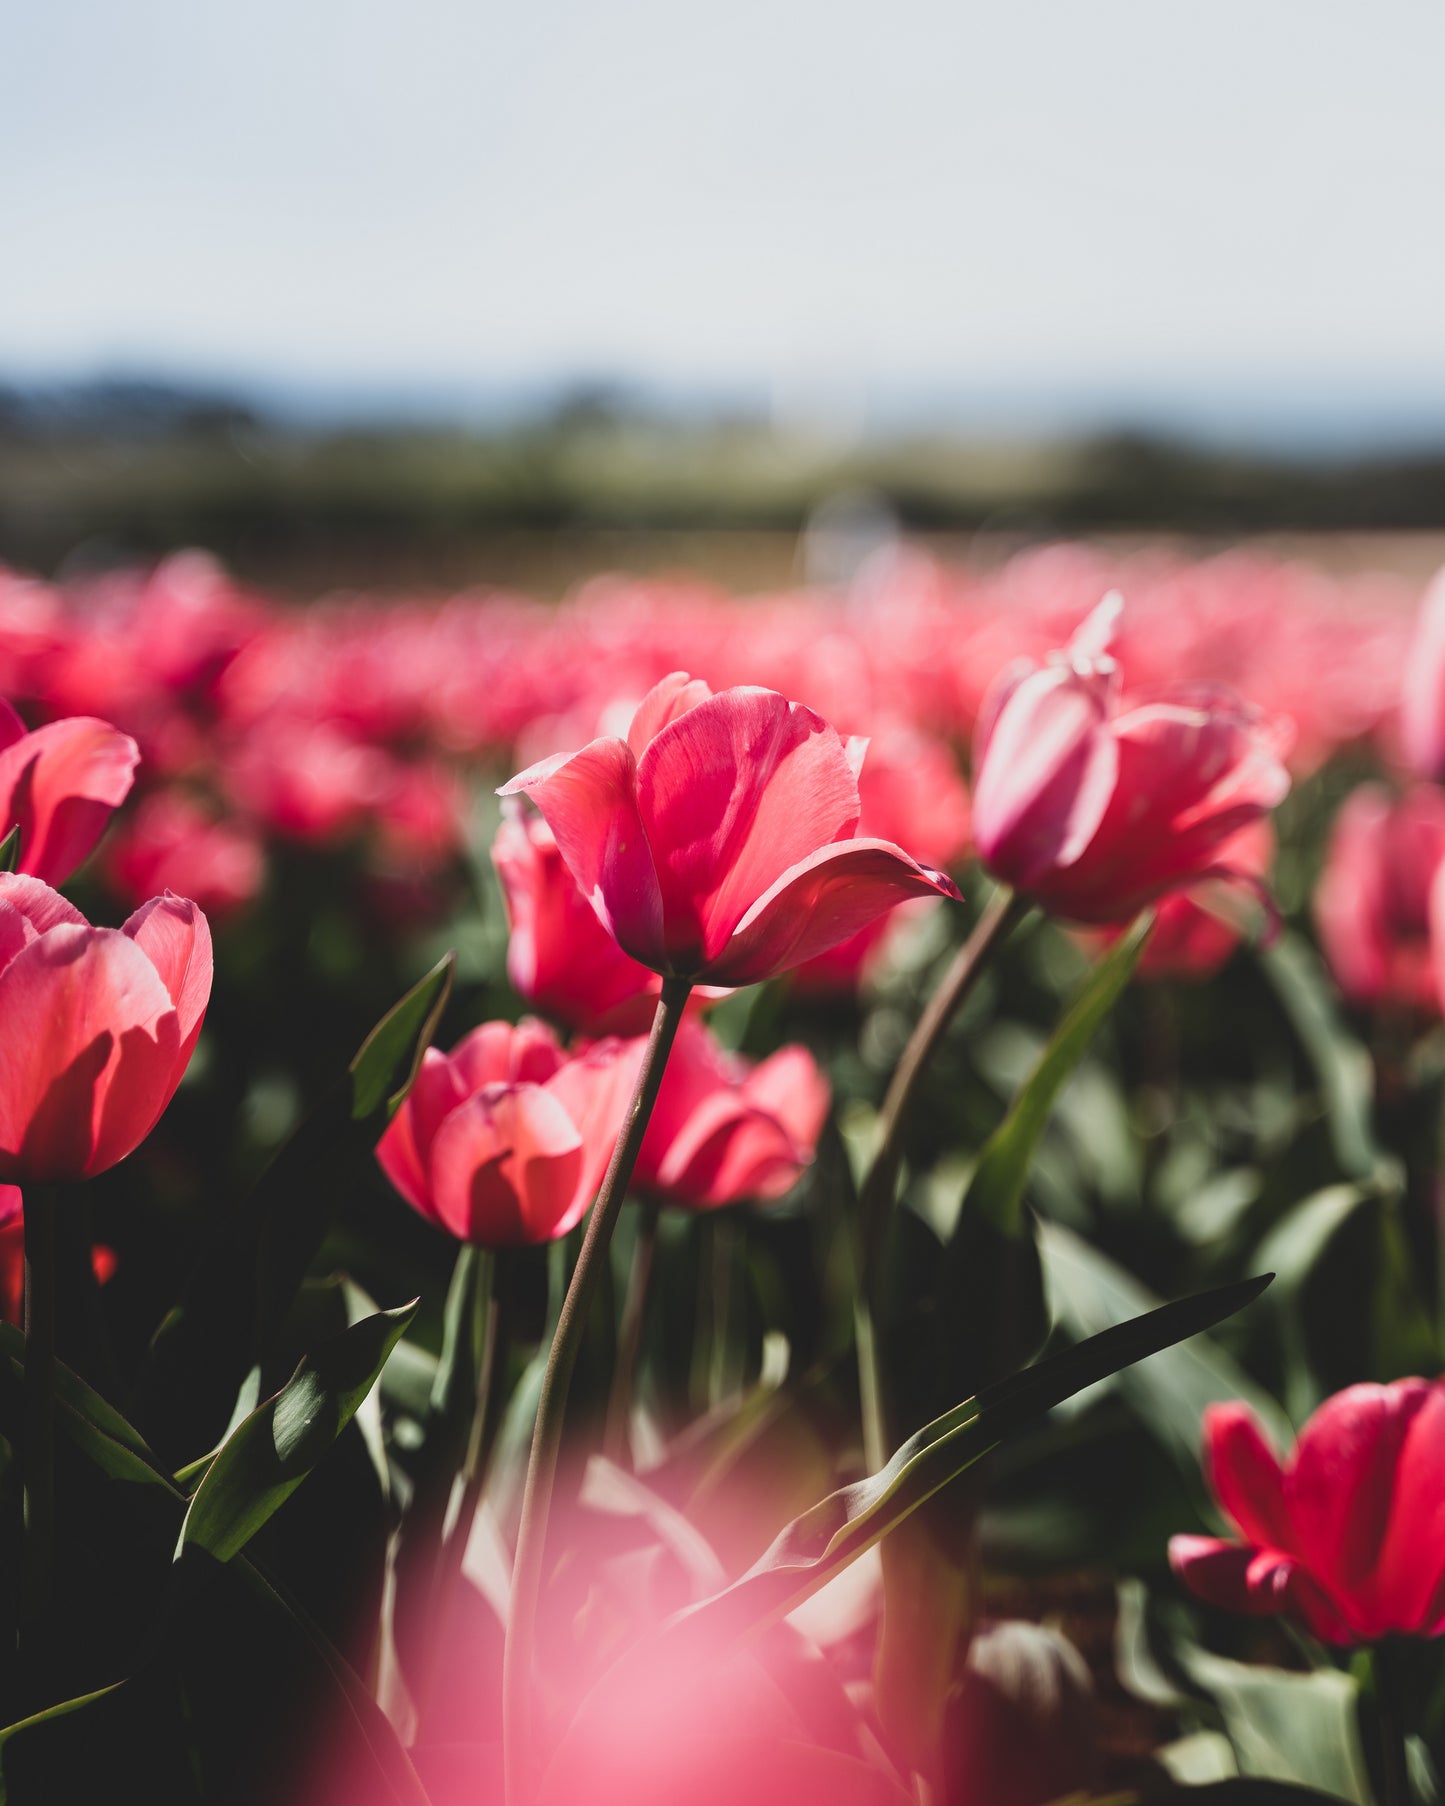 range Tasmania greeting card image of a Tasmania Tulip farm showing vivid pink tulips